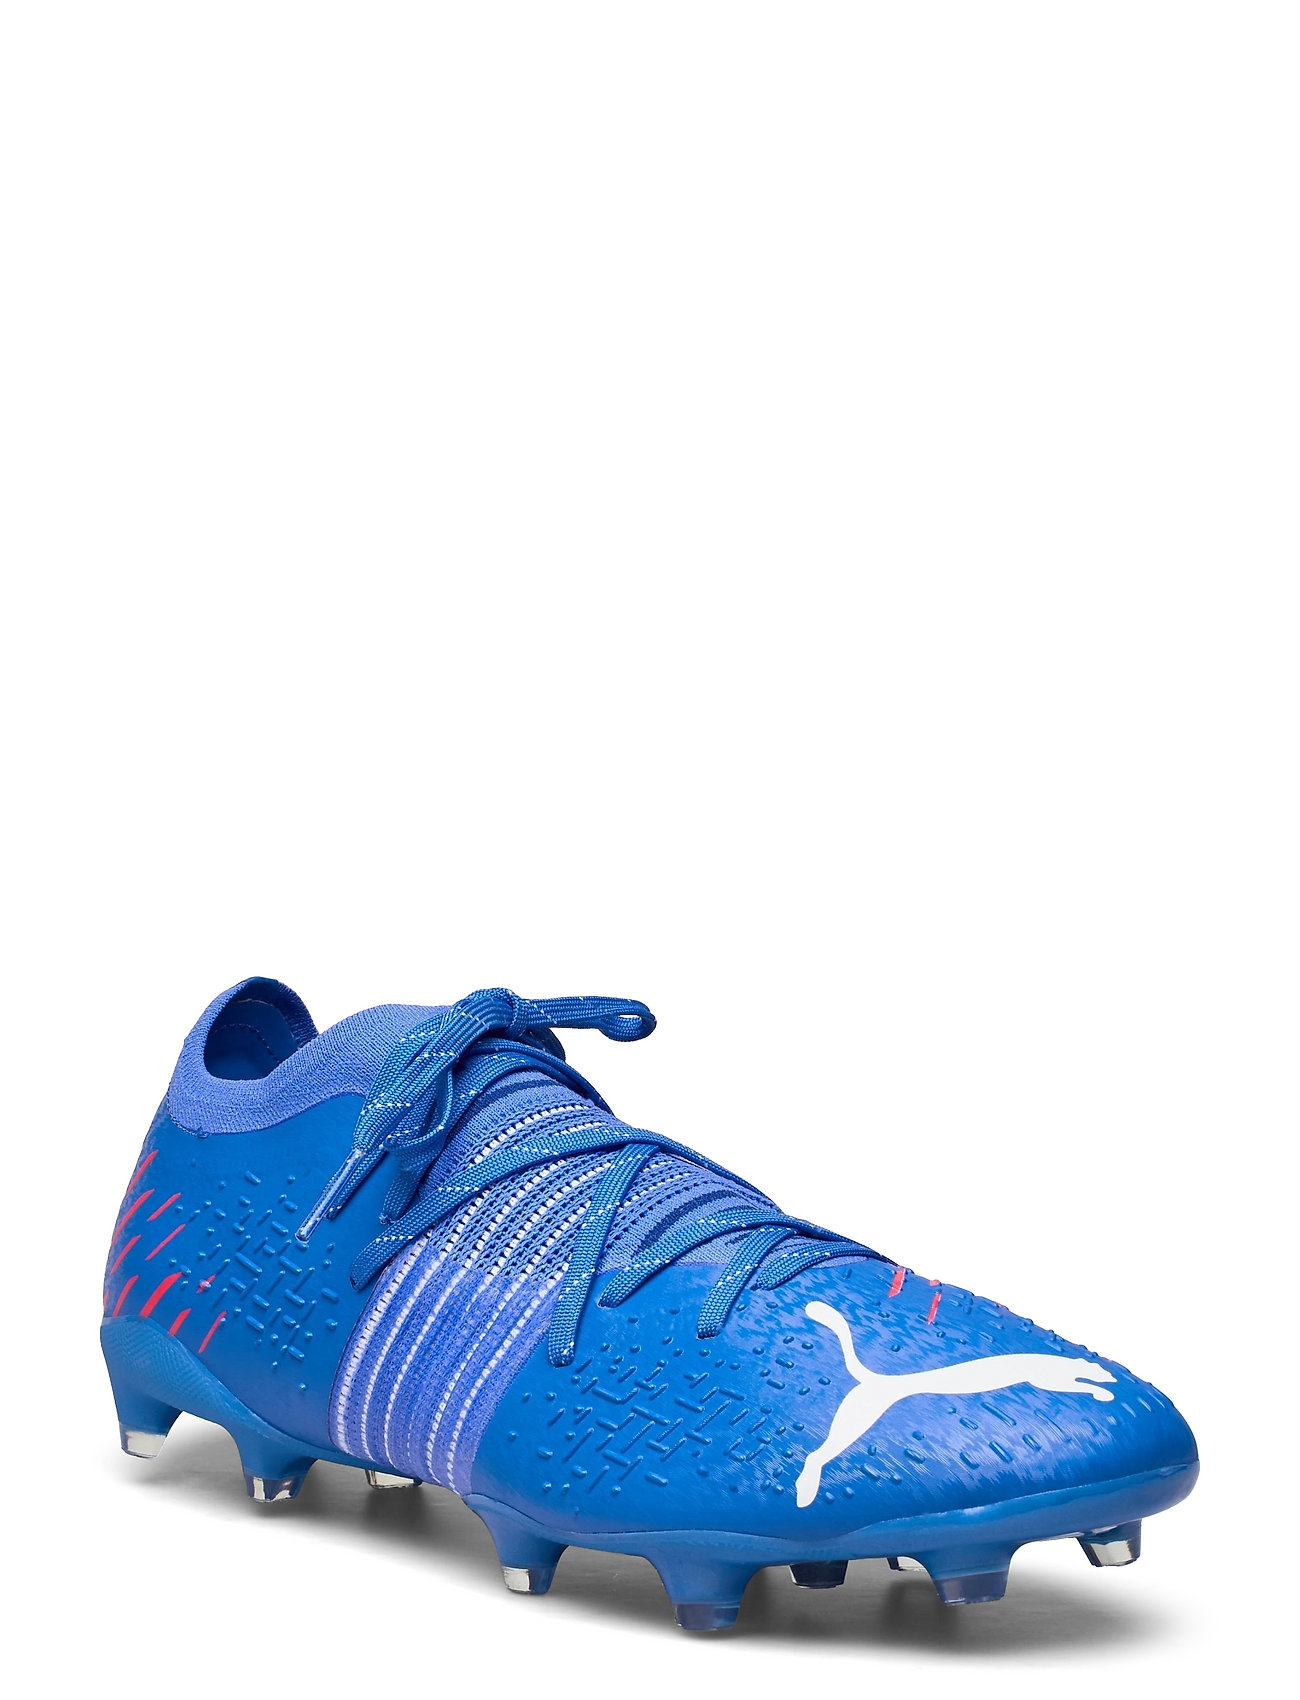 Future Z 2.2 Fg/Ag Shoes Sport Shoes Football Boots Sininen PUMA